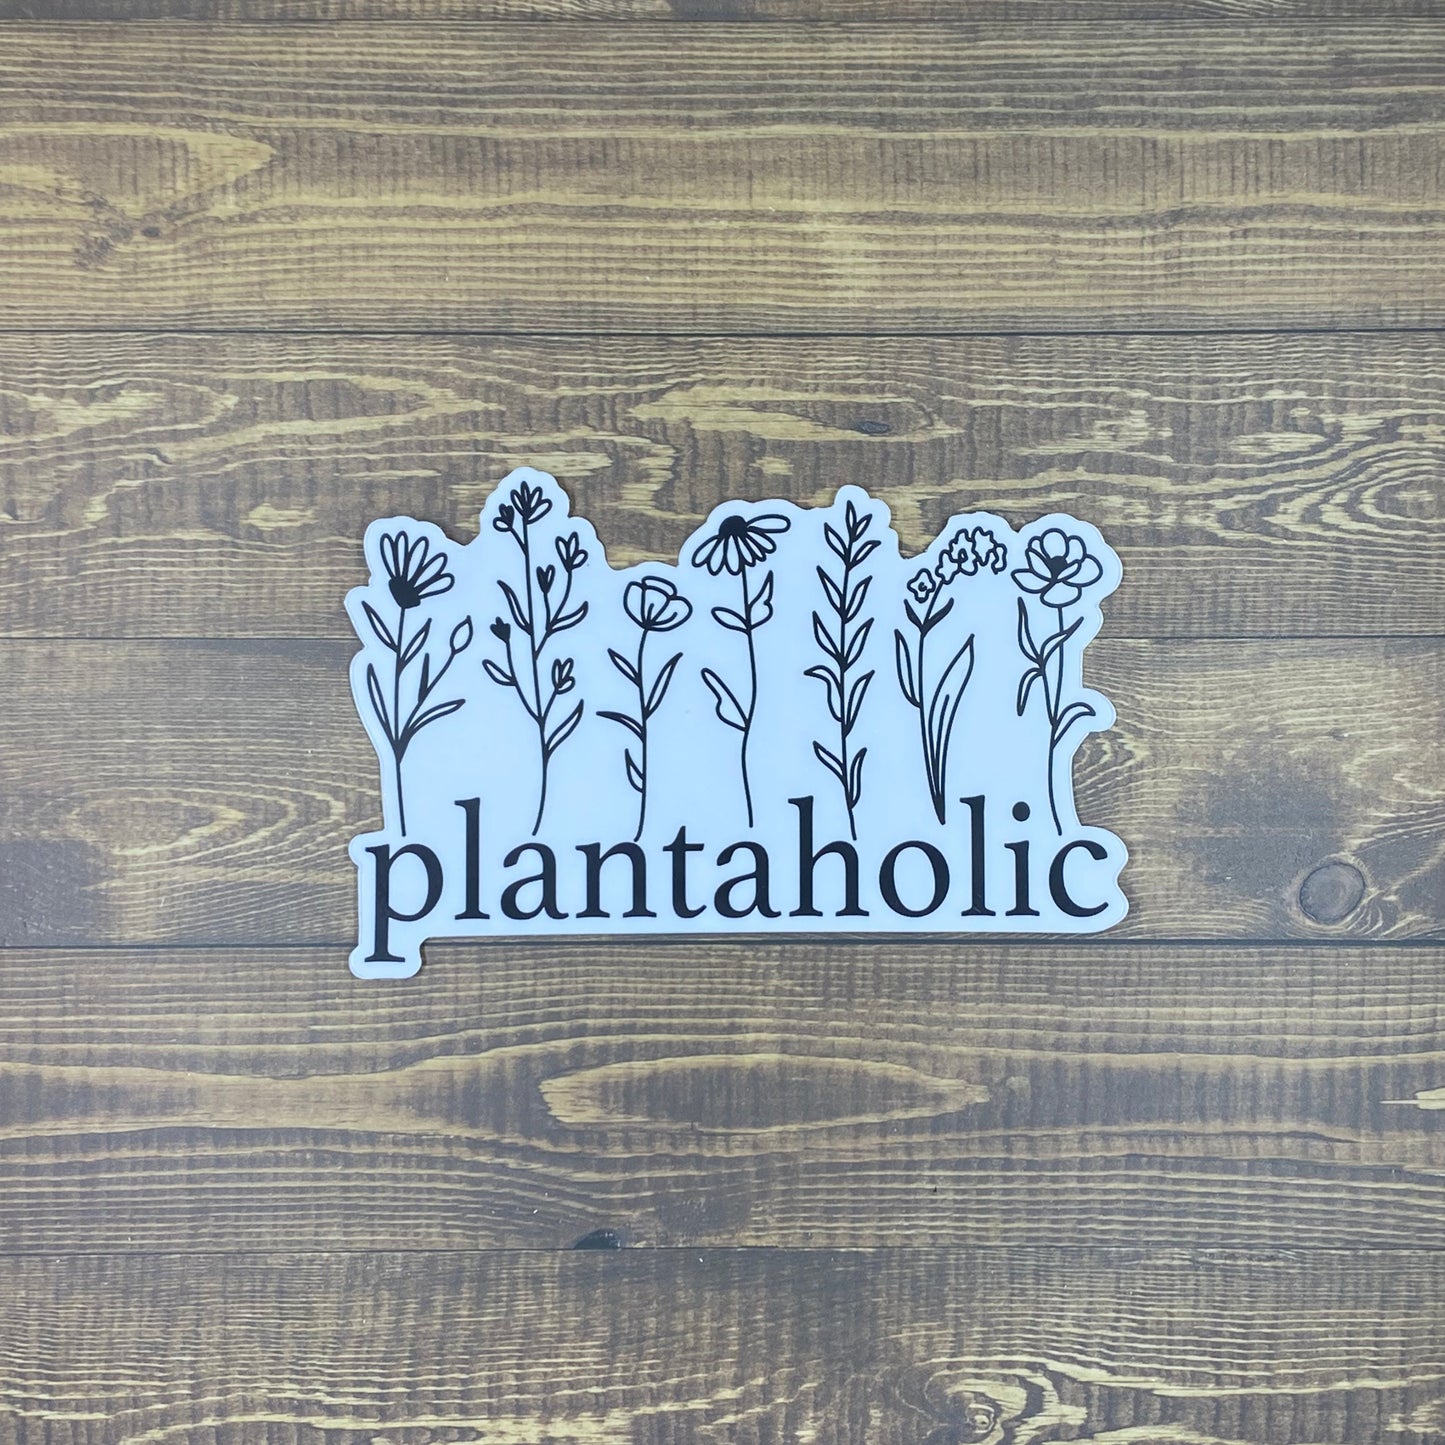 Plantaholic Bumper Sticker